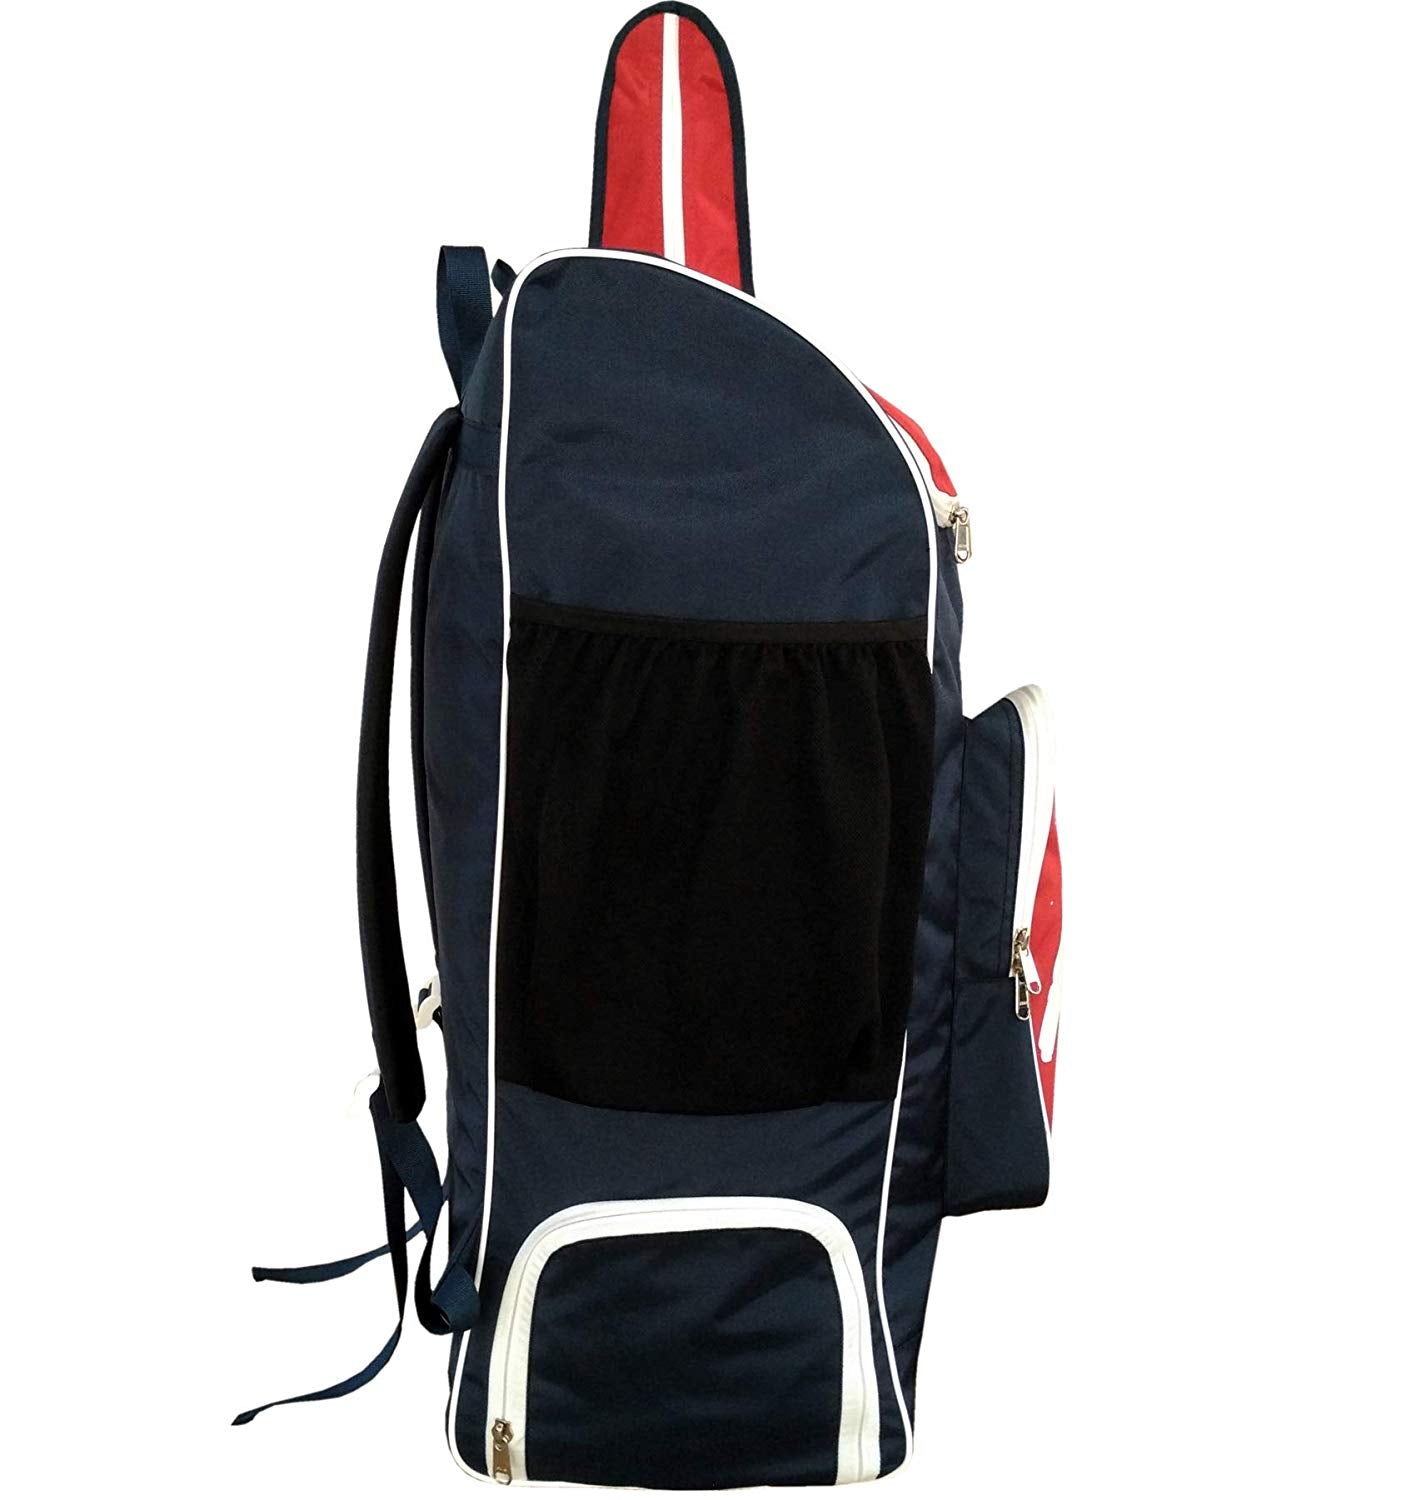 Prokick Backpack Style Cricket Kit Bag - Red - Best Price online Prokicksports.com